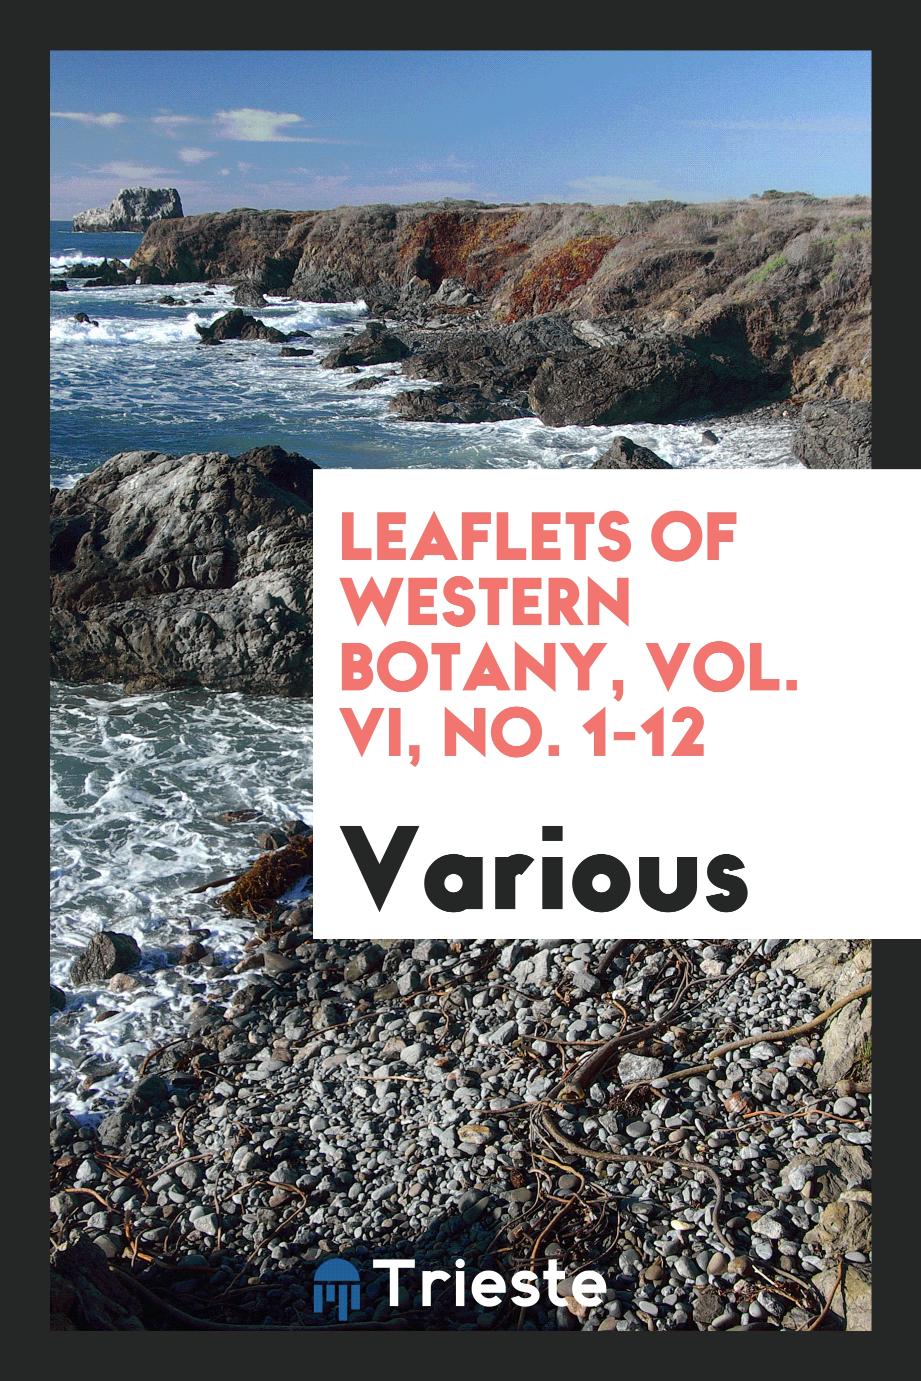 Leaflets of western botany, Vol. VI, No. 1-12